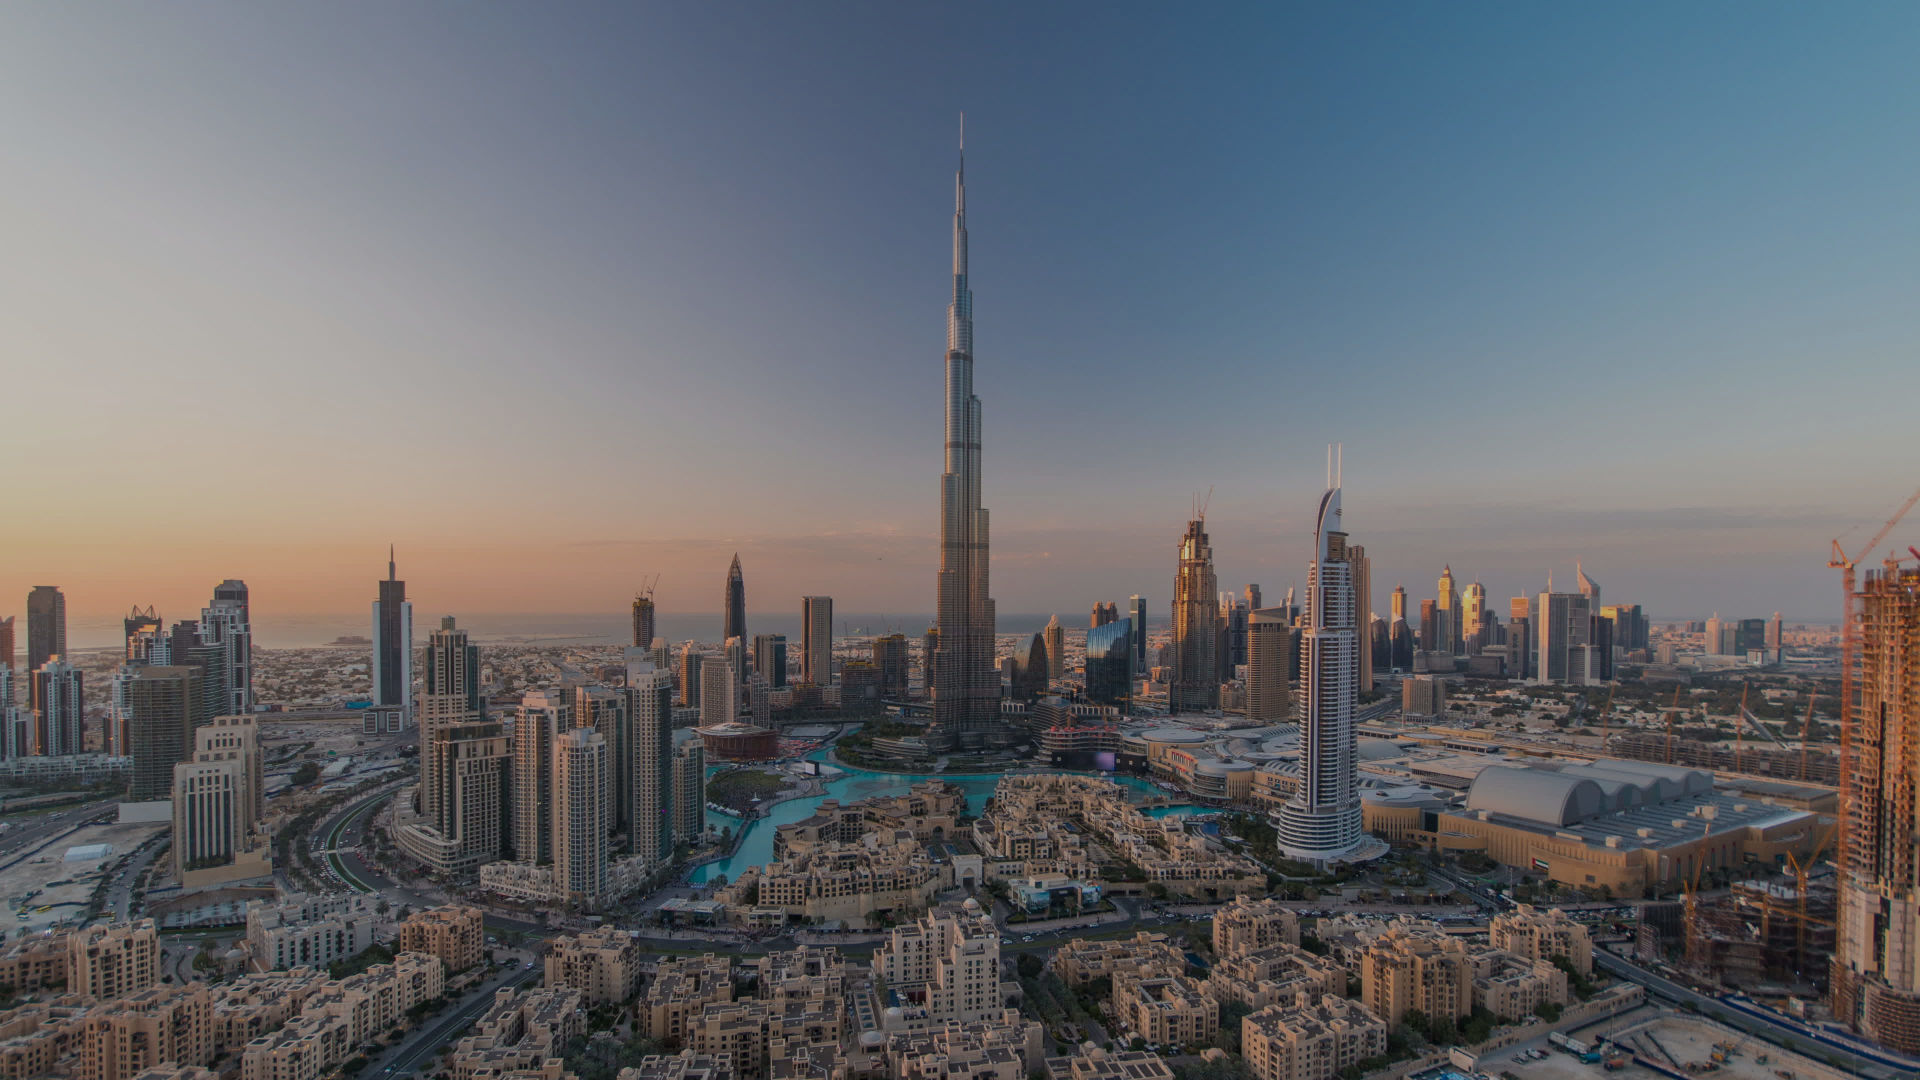 The world’s tallest tower, the iconic Burj Khalifa. 